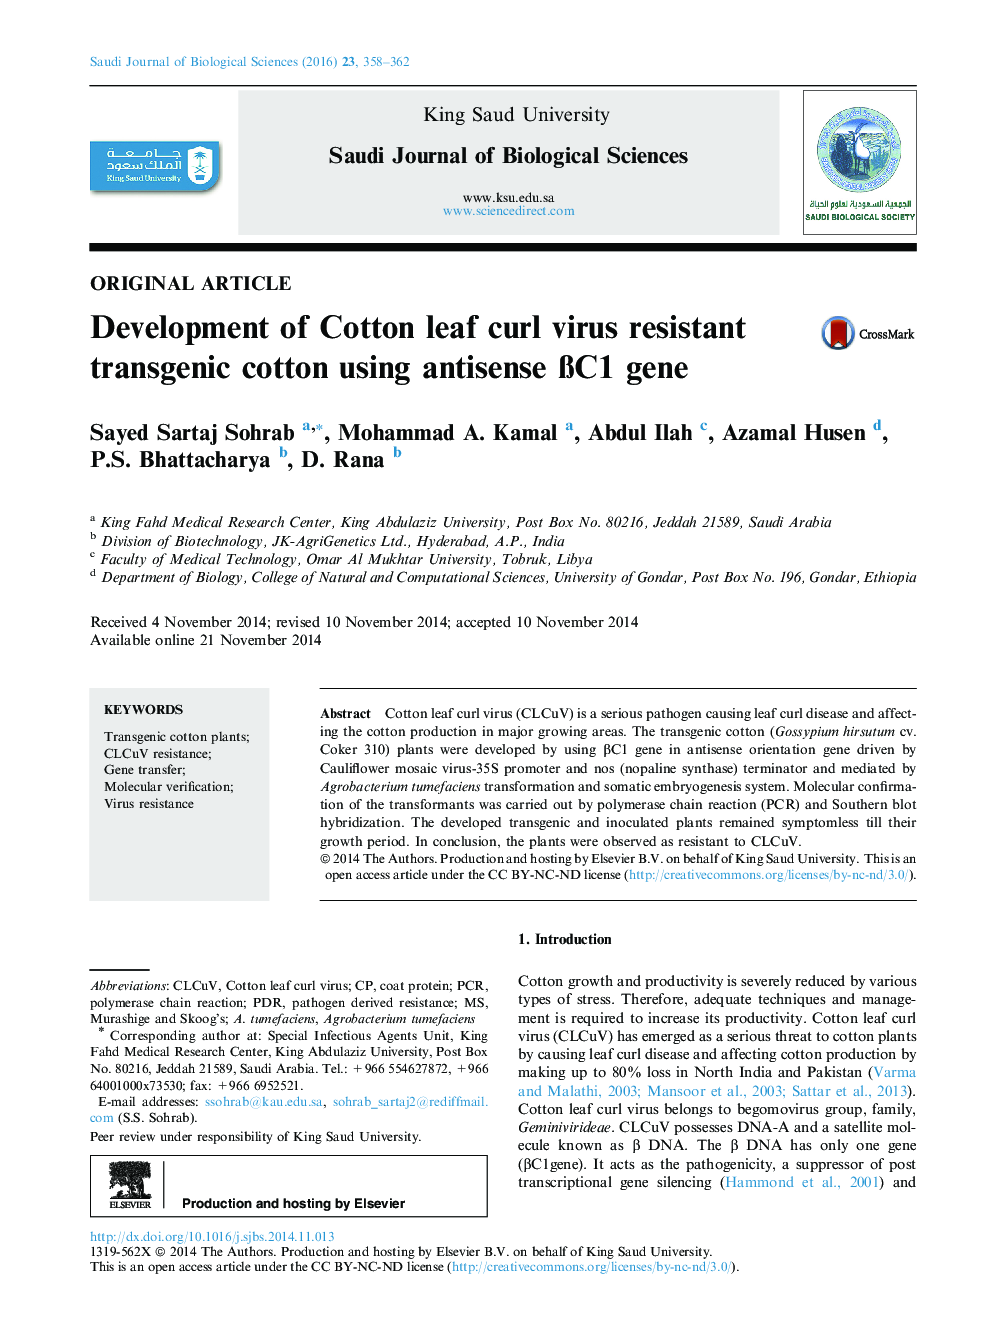 Development of Cotton leaf curl virus resistant transgenic cotton using antisense ßC1 gene 